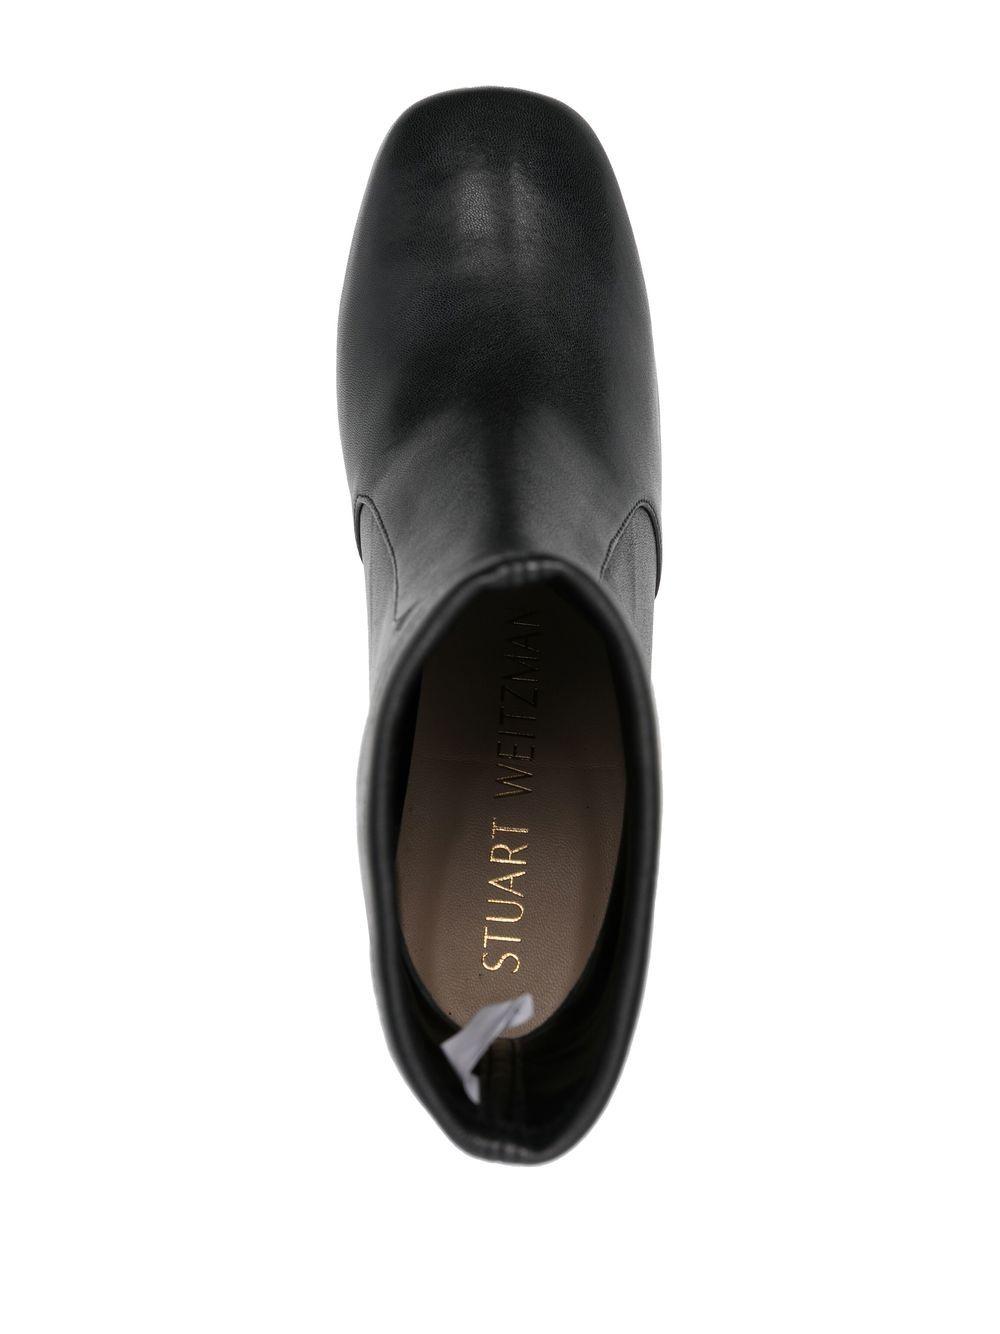 Stuart Weitzman Sleek 60mm Ankle Boots in Black | Lyst